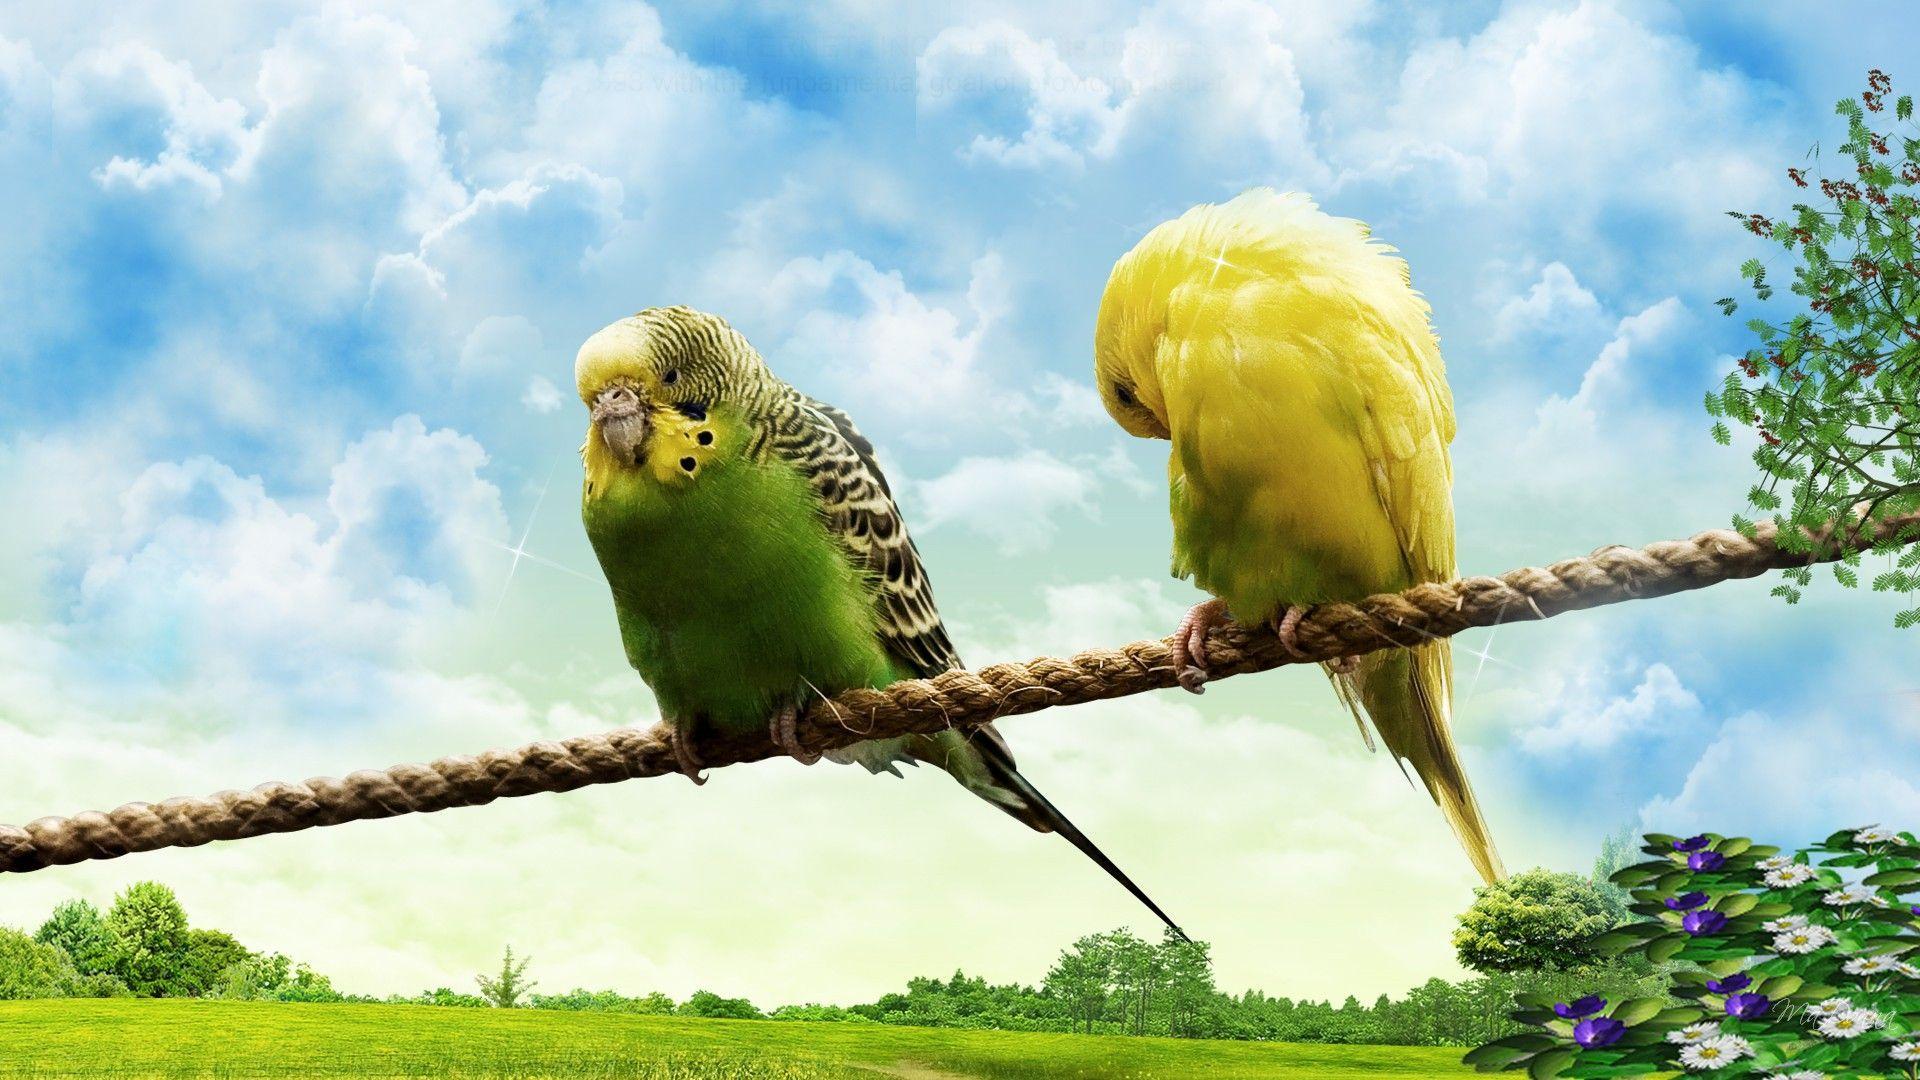 Wildlife Photo & Lovebirds Picture. PC Wallpaper Free Downloads